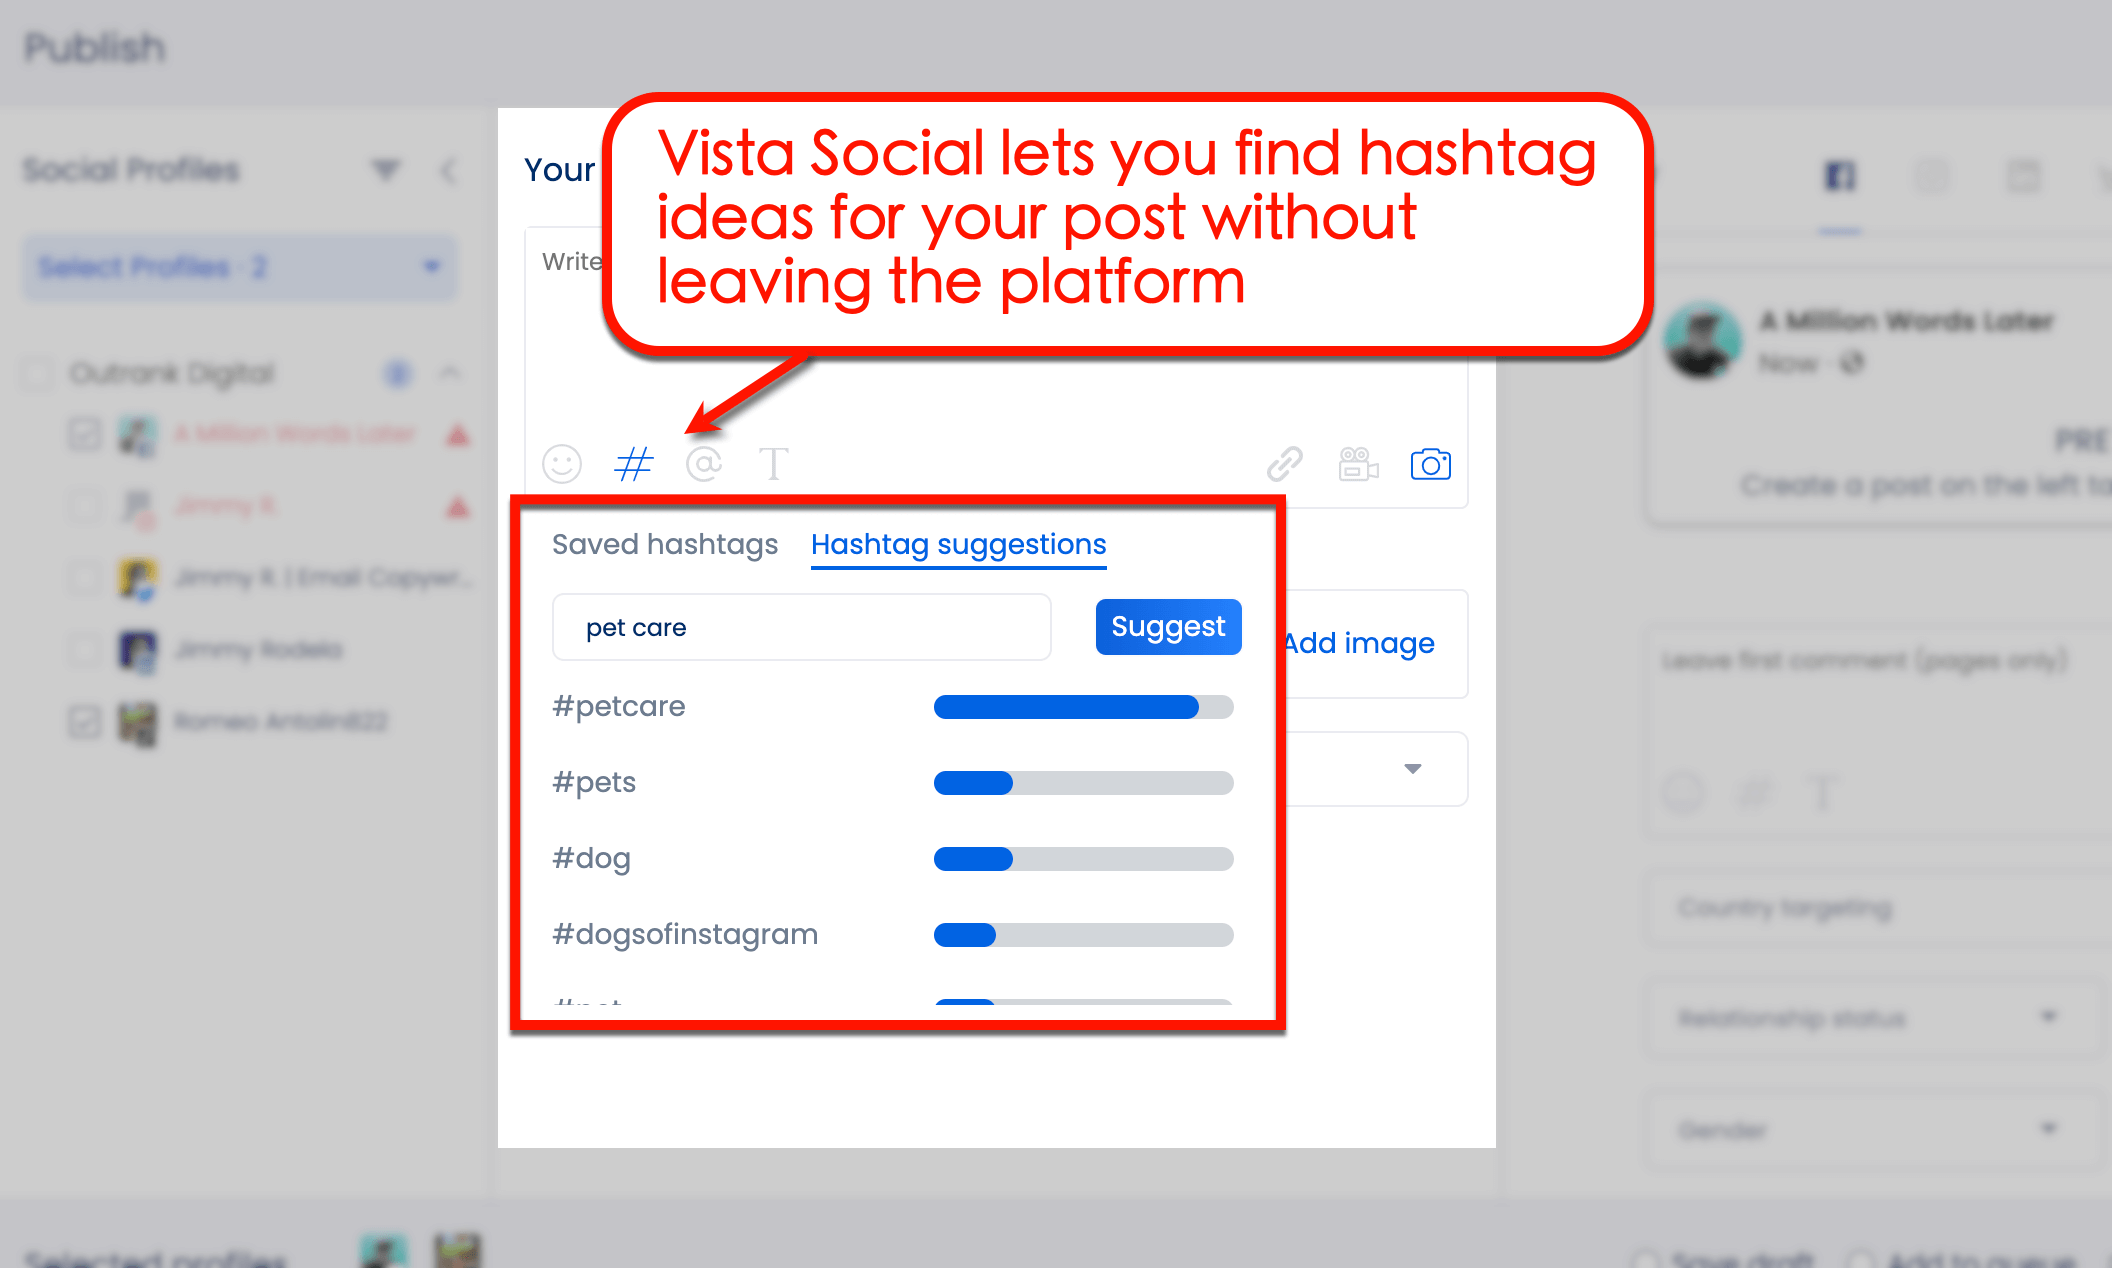 Vista Social's hashtag suggestions